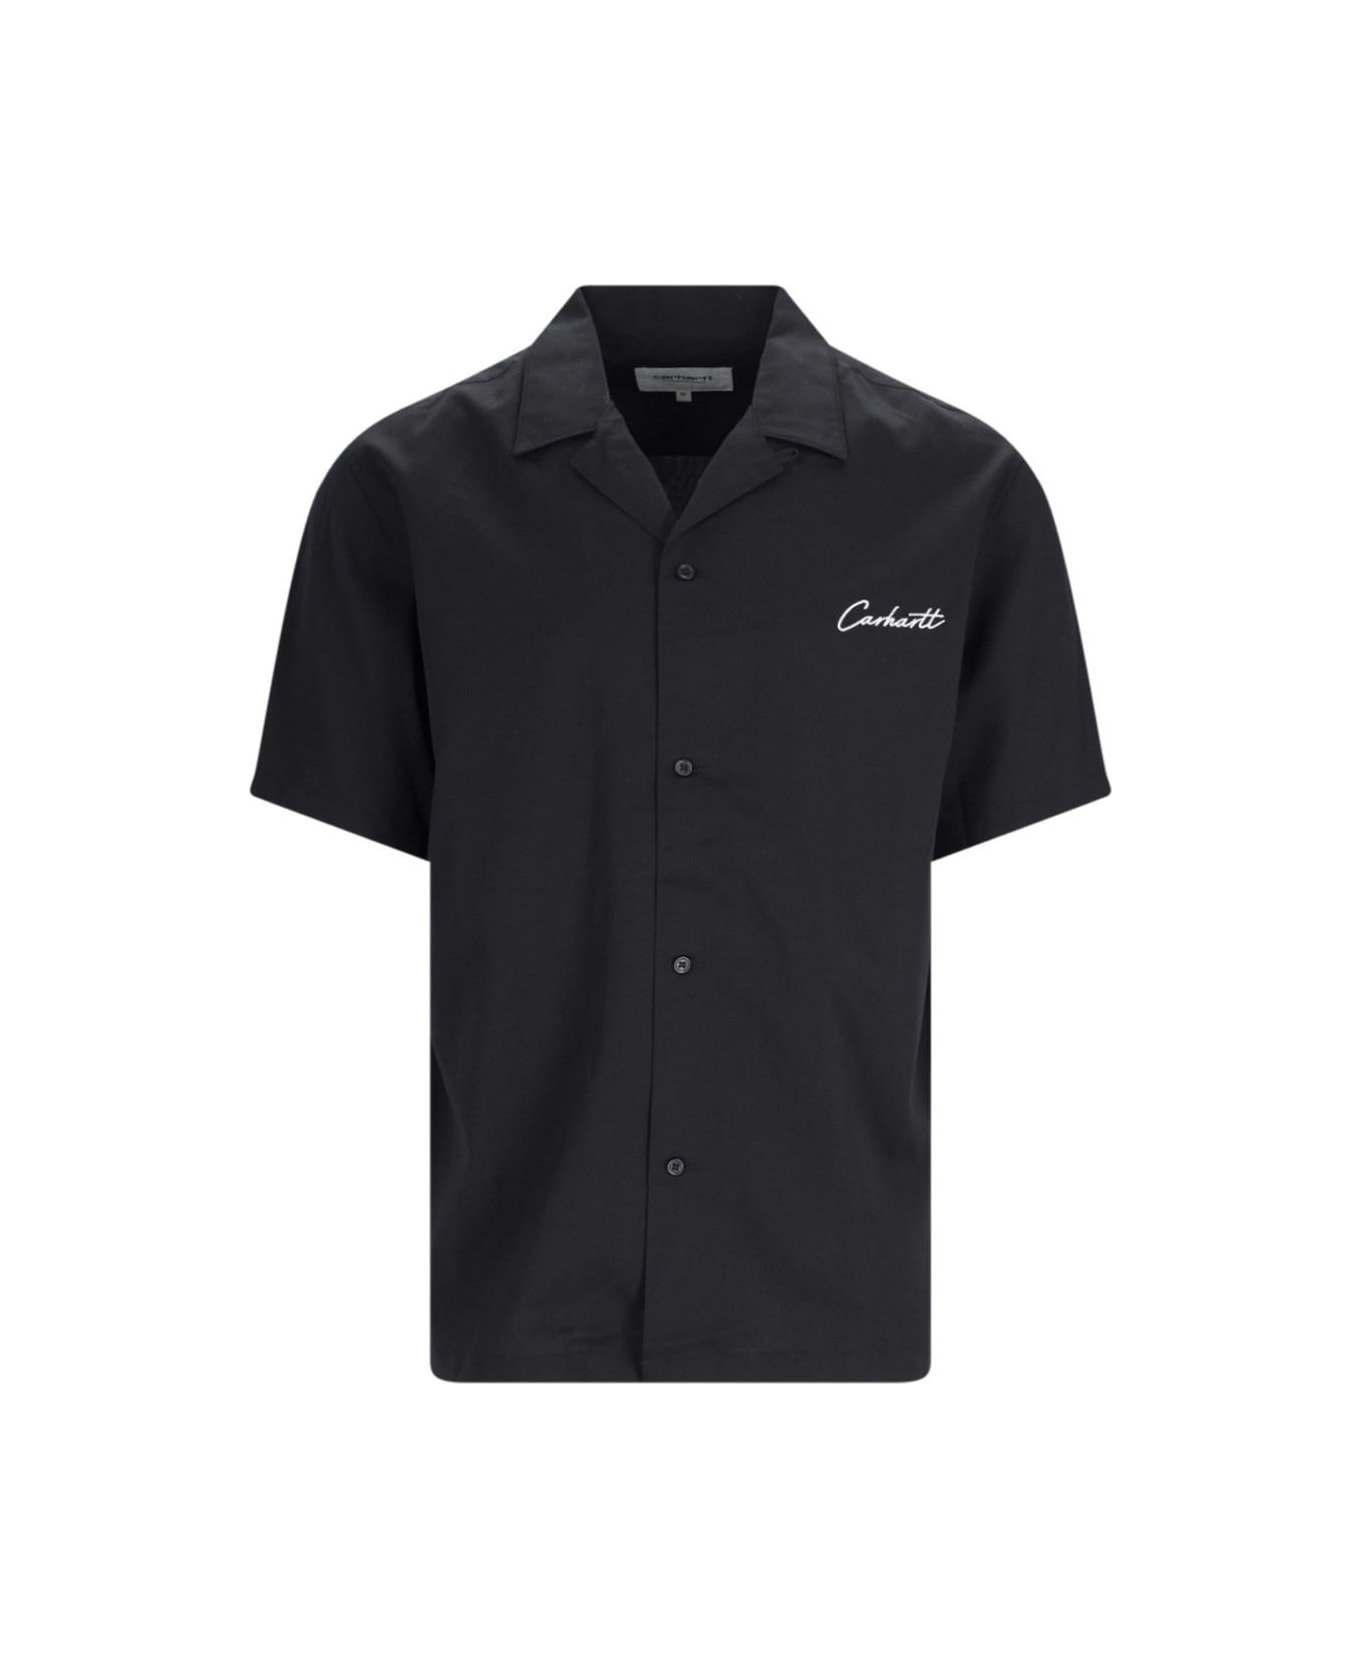 Carhartt 'delray' Shirt - Xx Black Wax